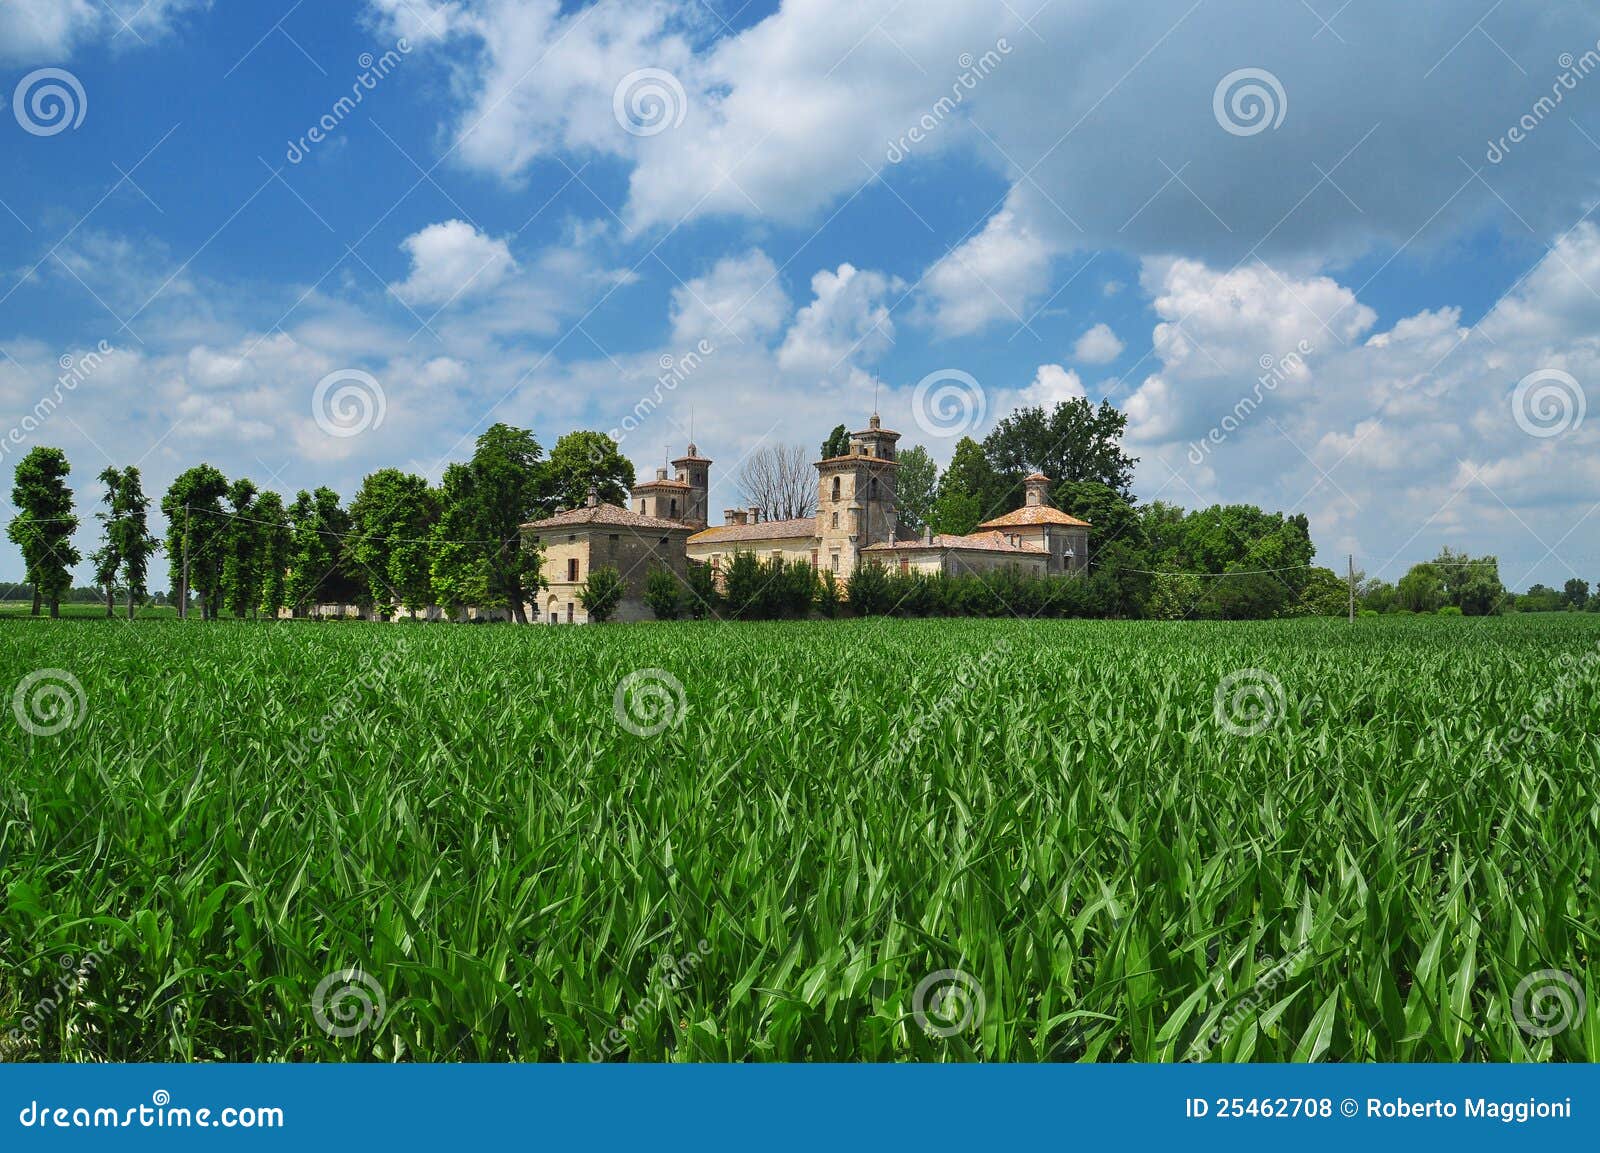 italian villa and lombardy countryside landscape